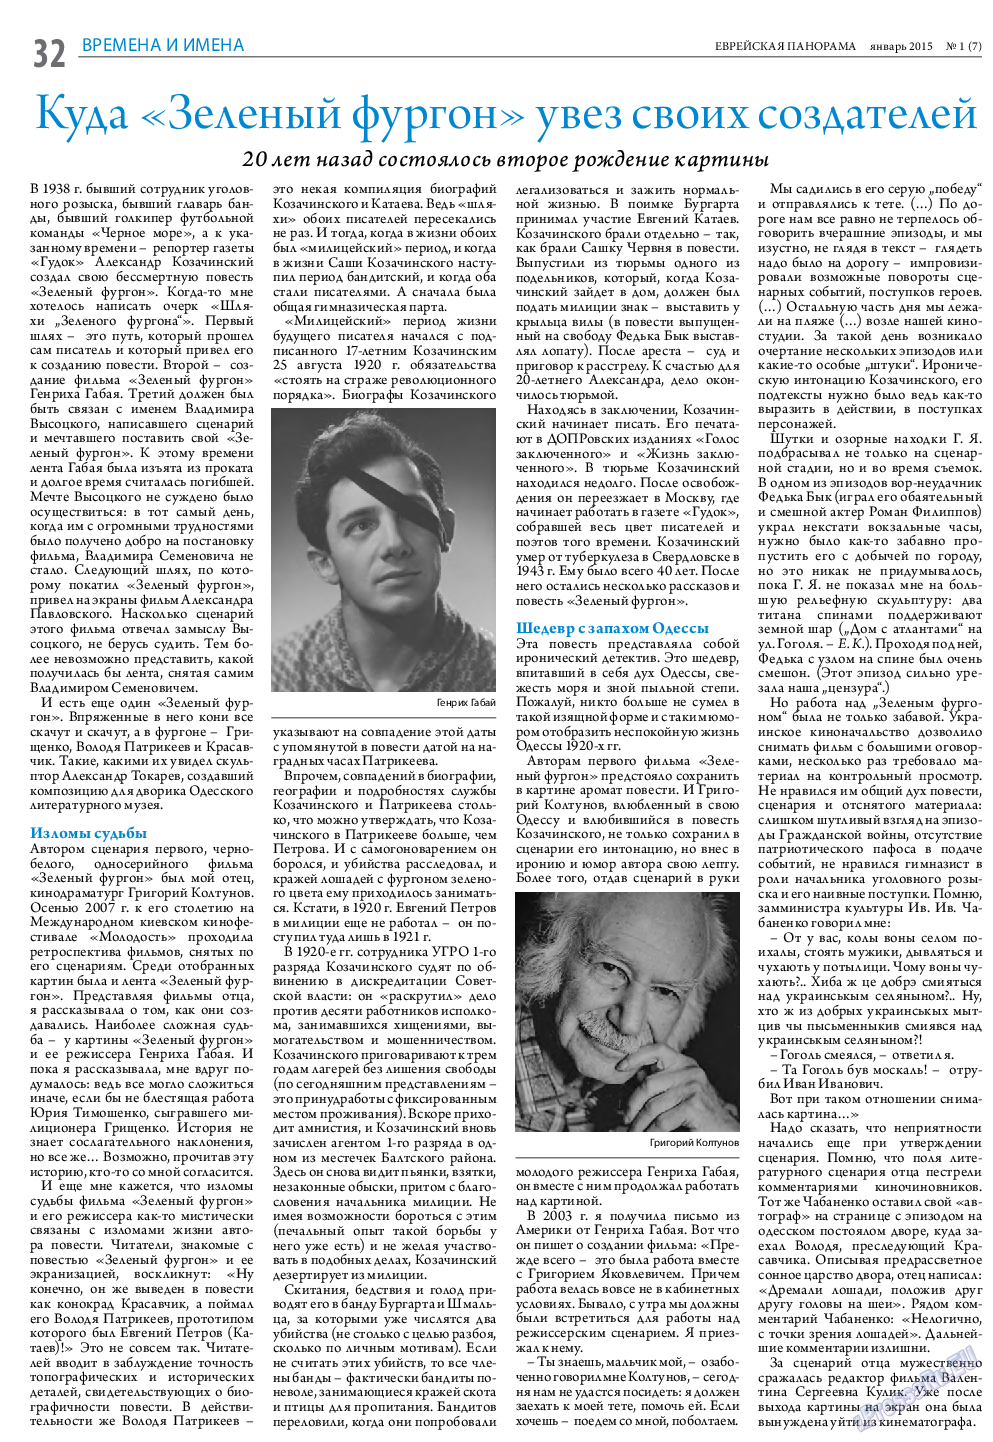 Еврейская панорама, газета. 2015 №1 стр.32